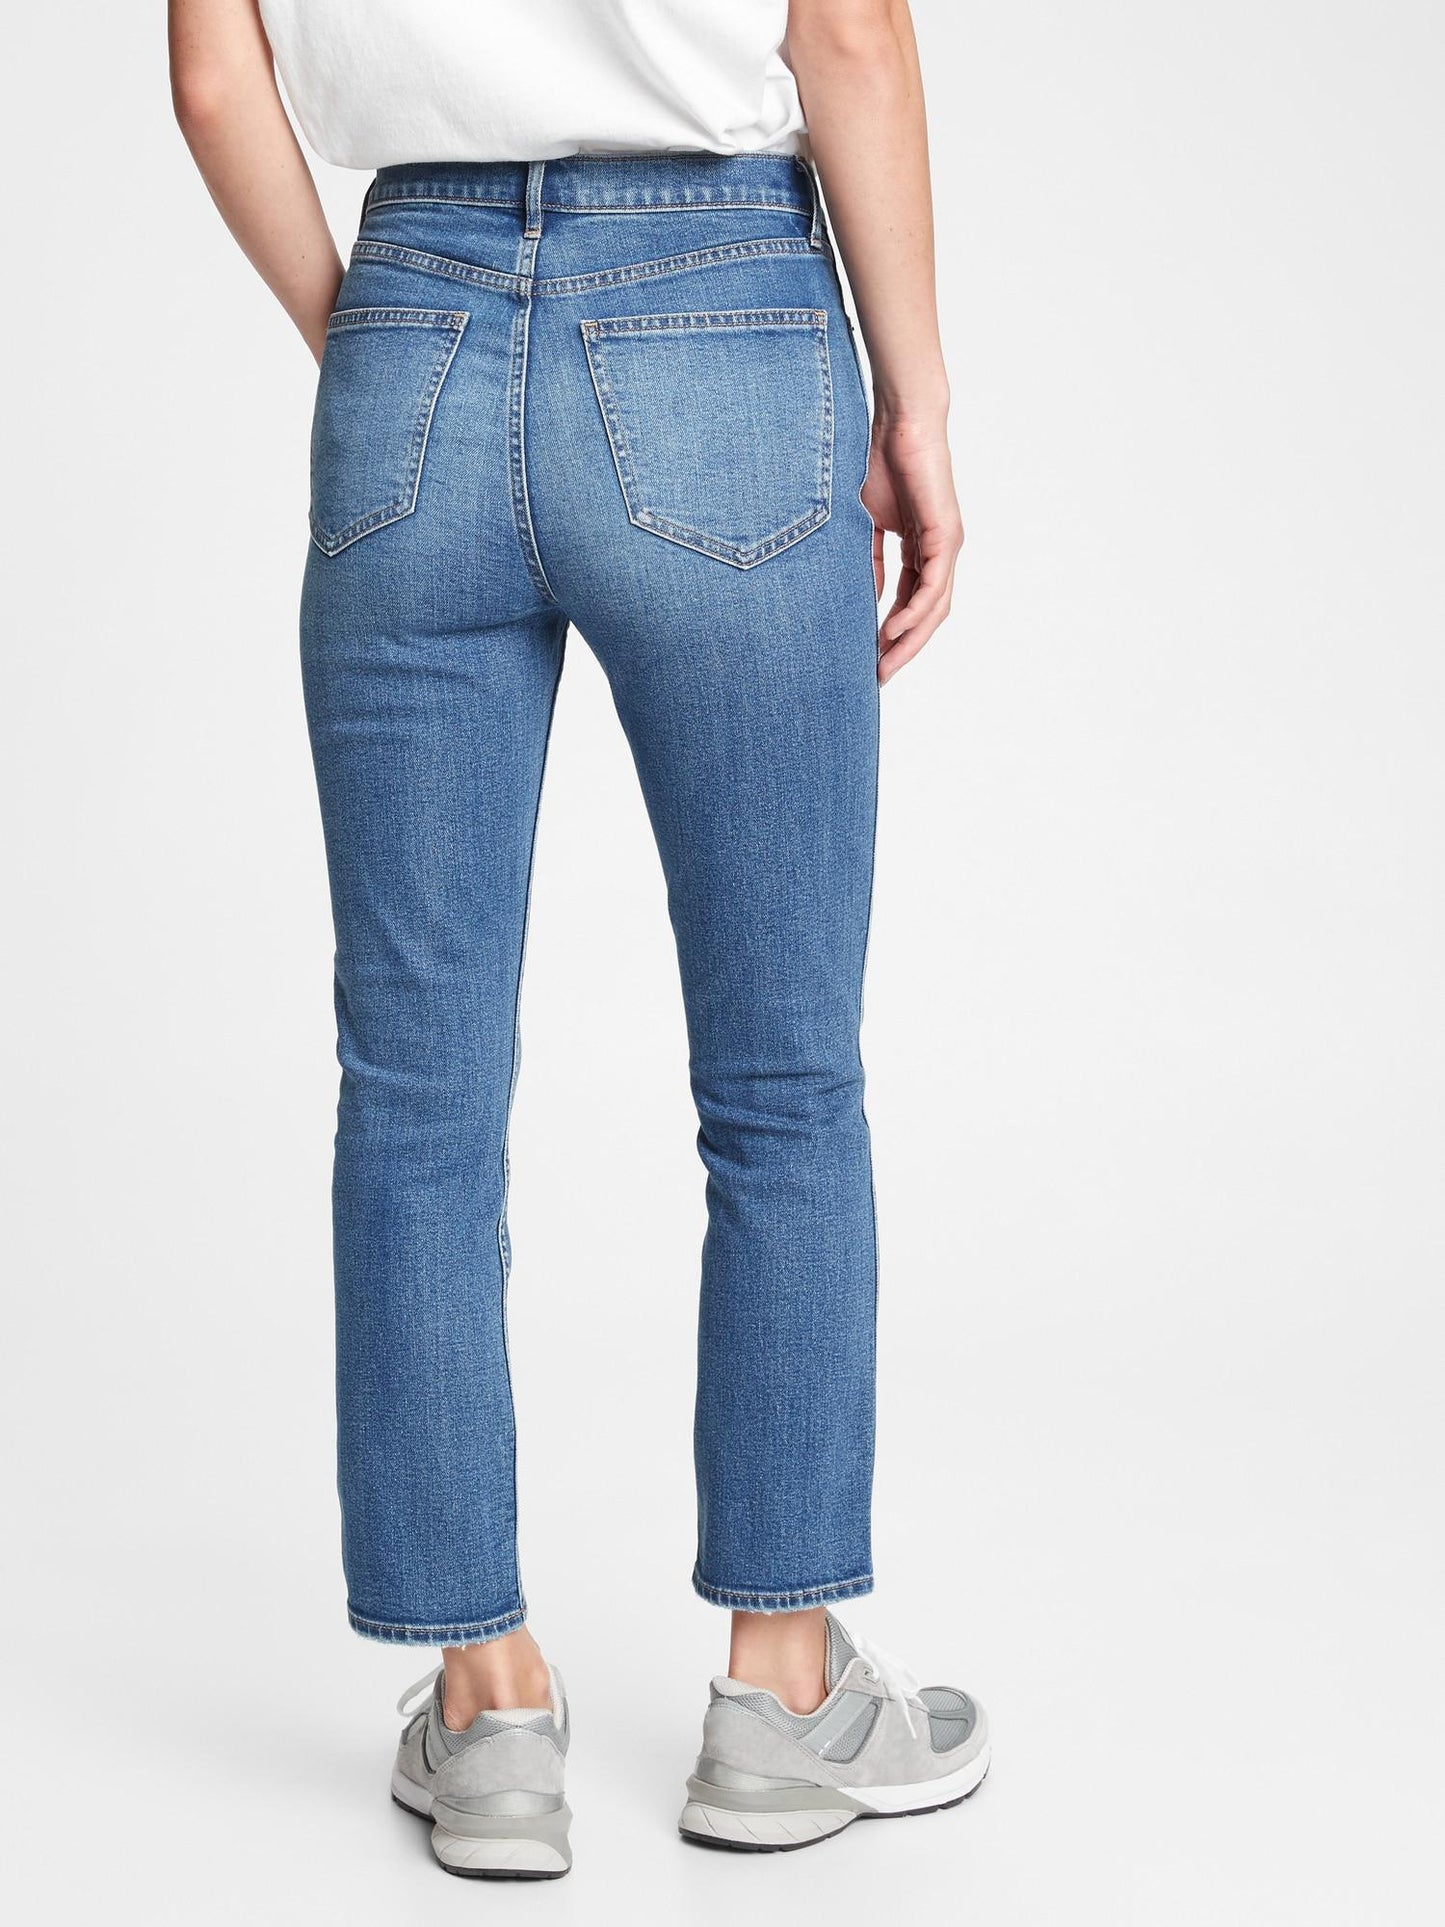 Jeans Vintage Slim Talle Alto